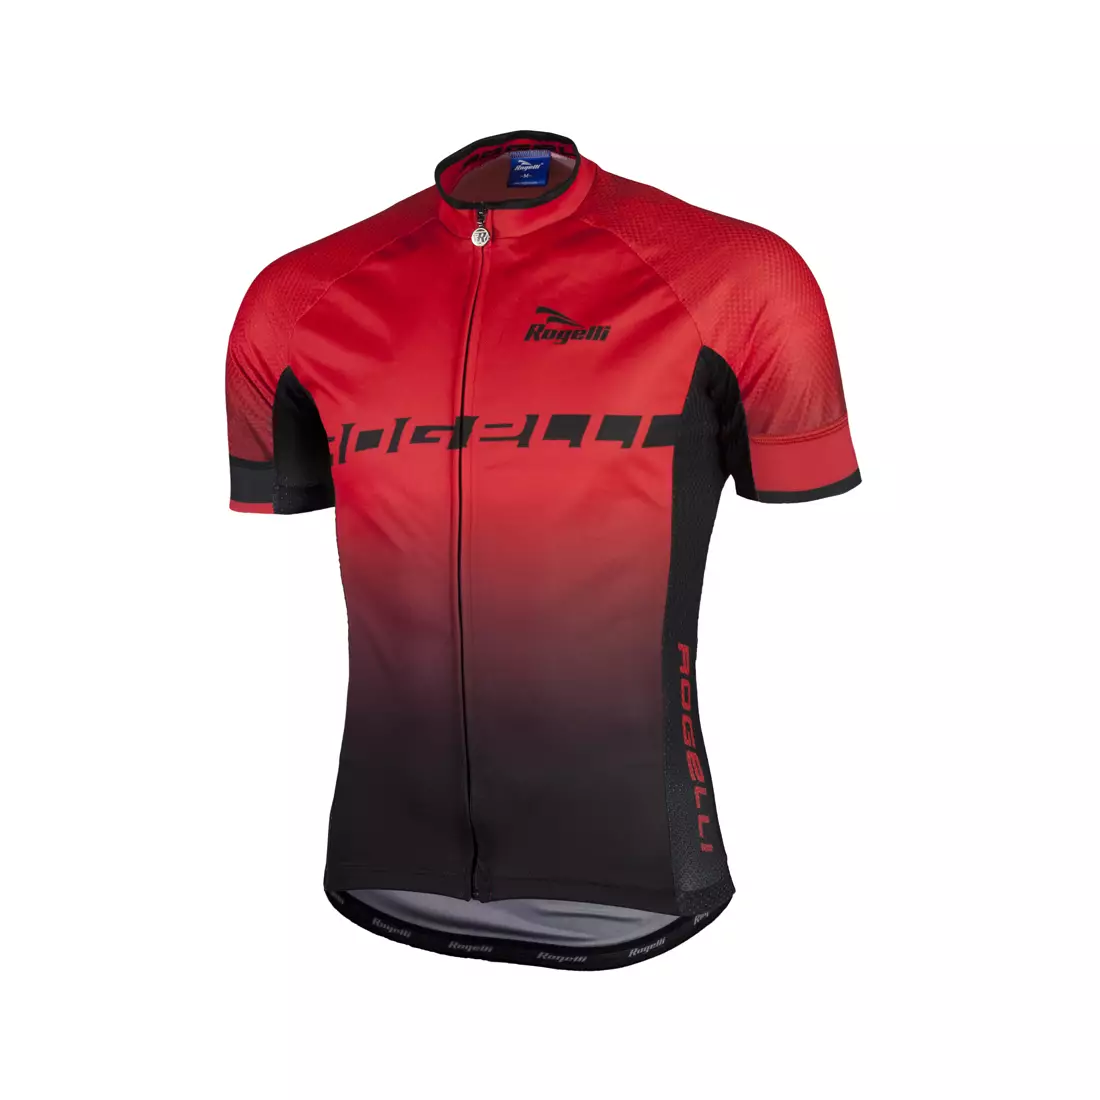 ROGELLI ISPIRATO tricou de ciclism, roșu și negru 001.401